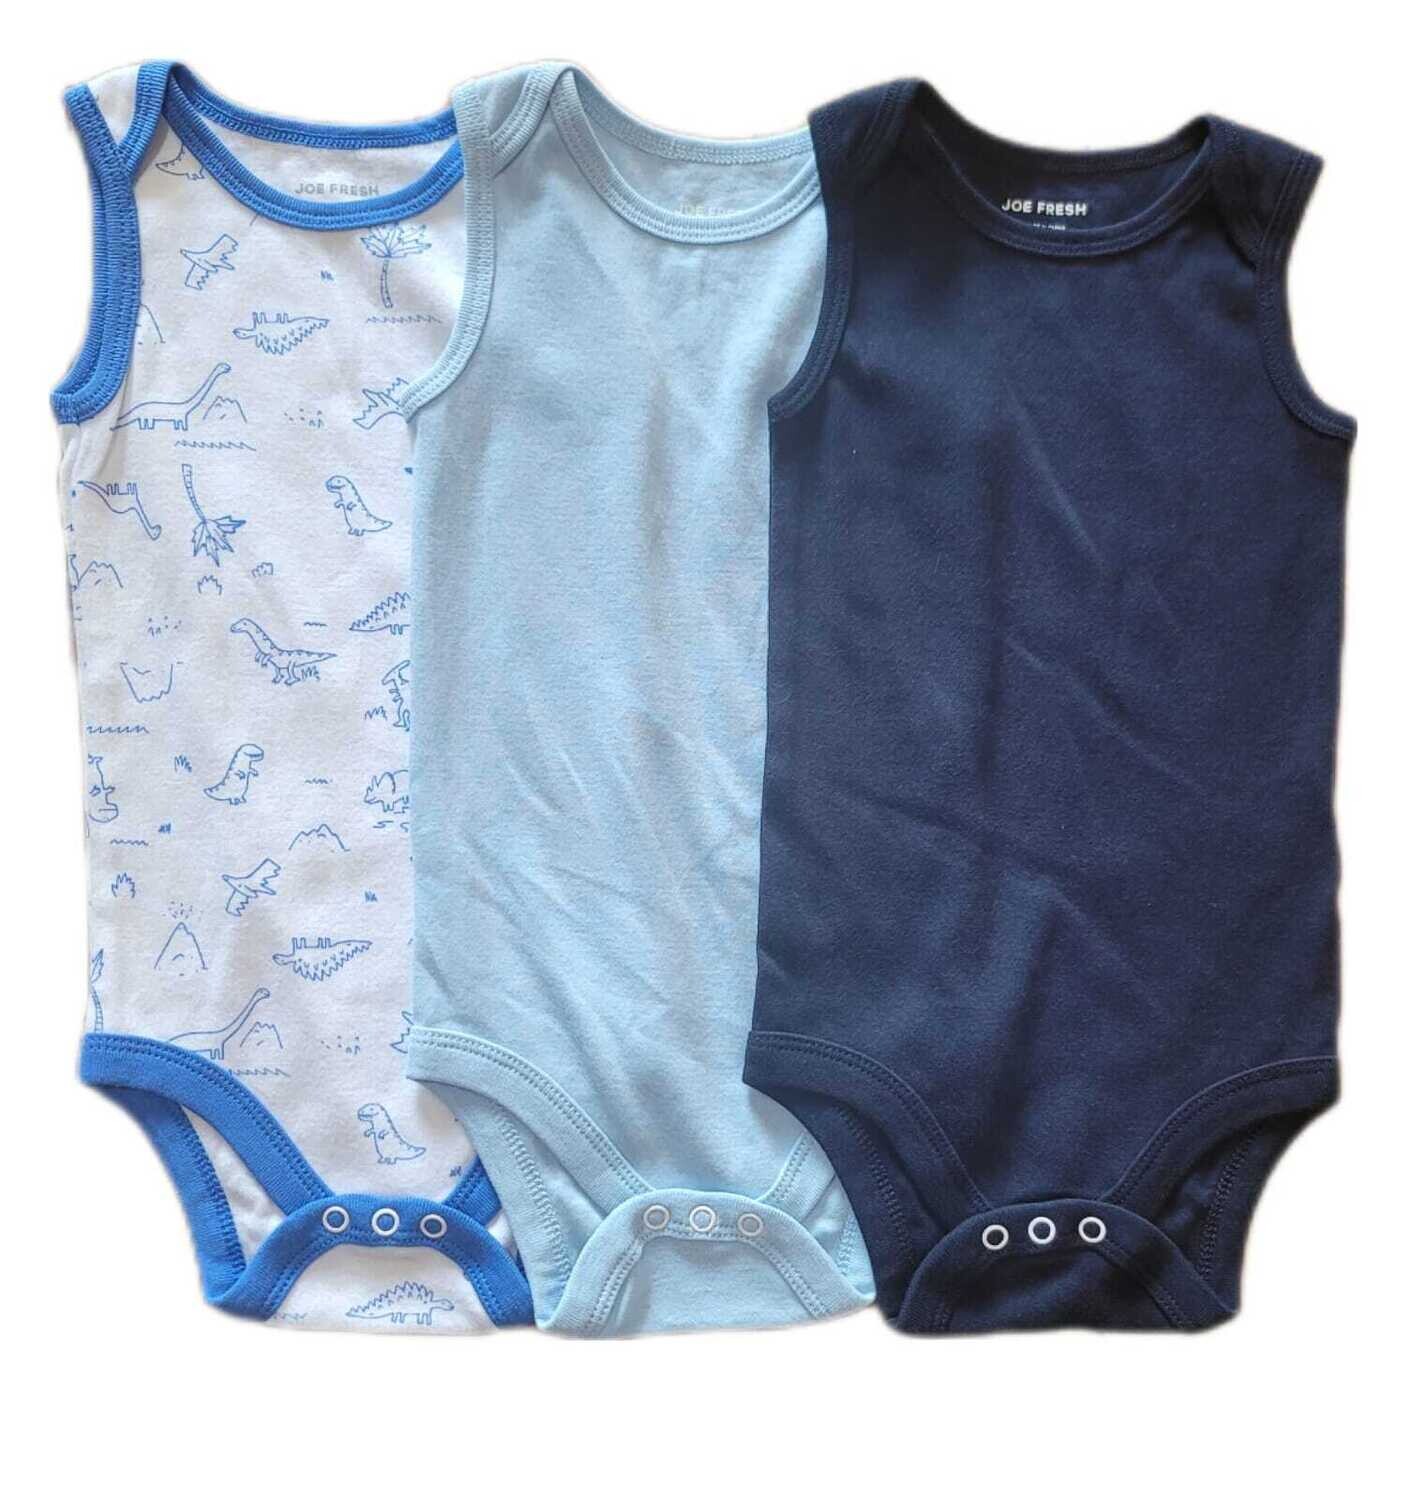 Joe Fresh Baby Boys 3-Pack Bodysuit Set